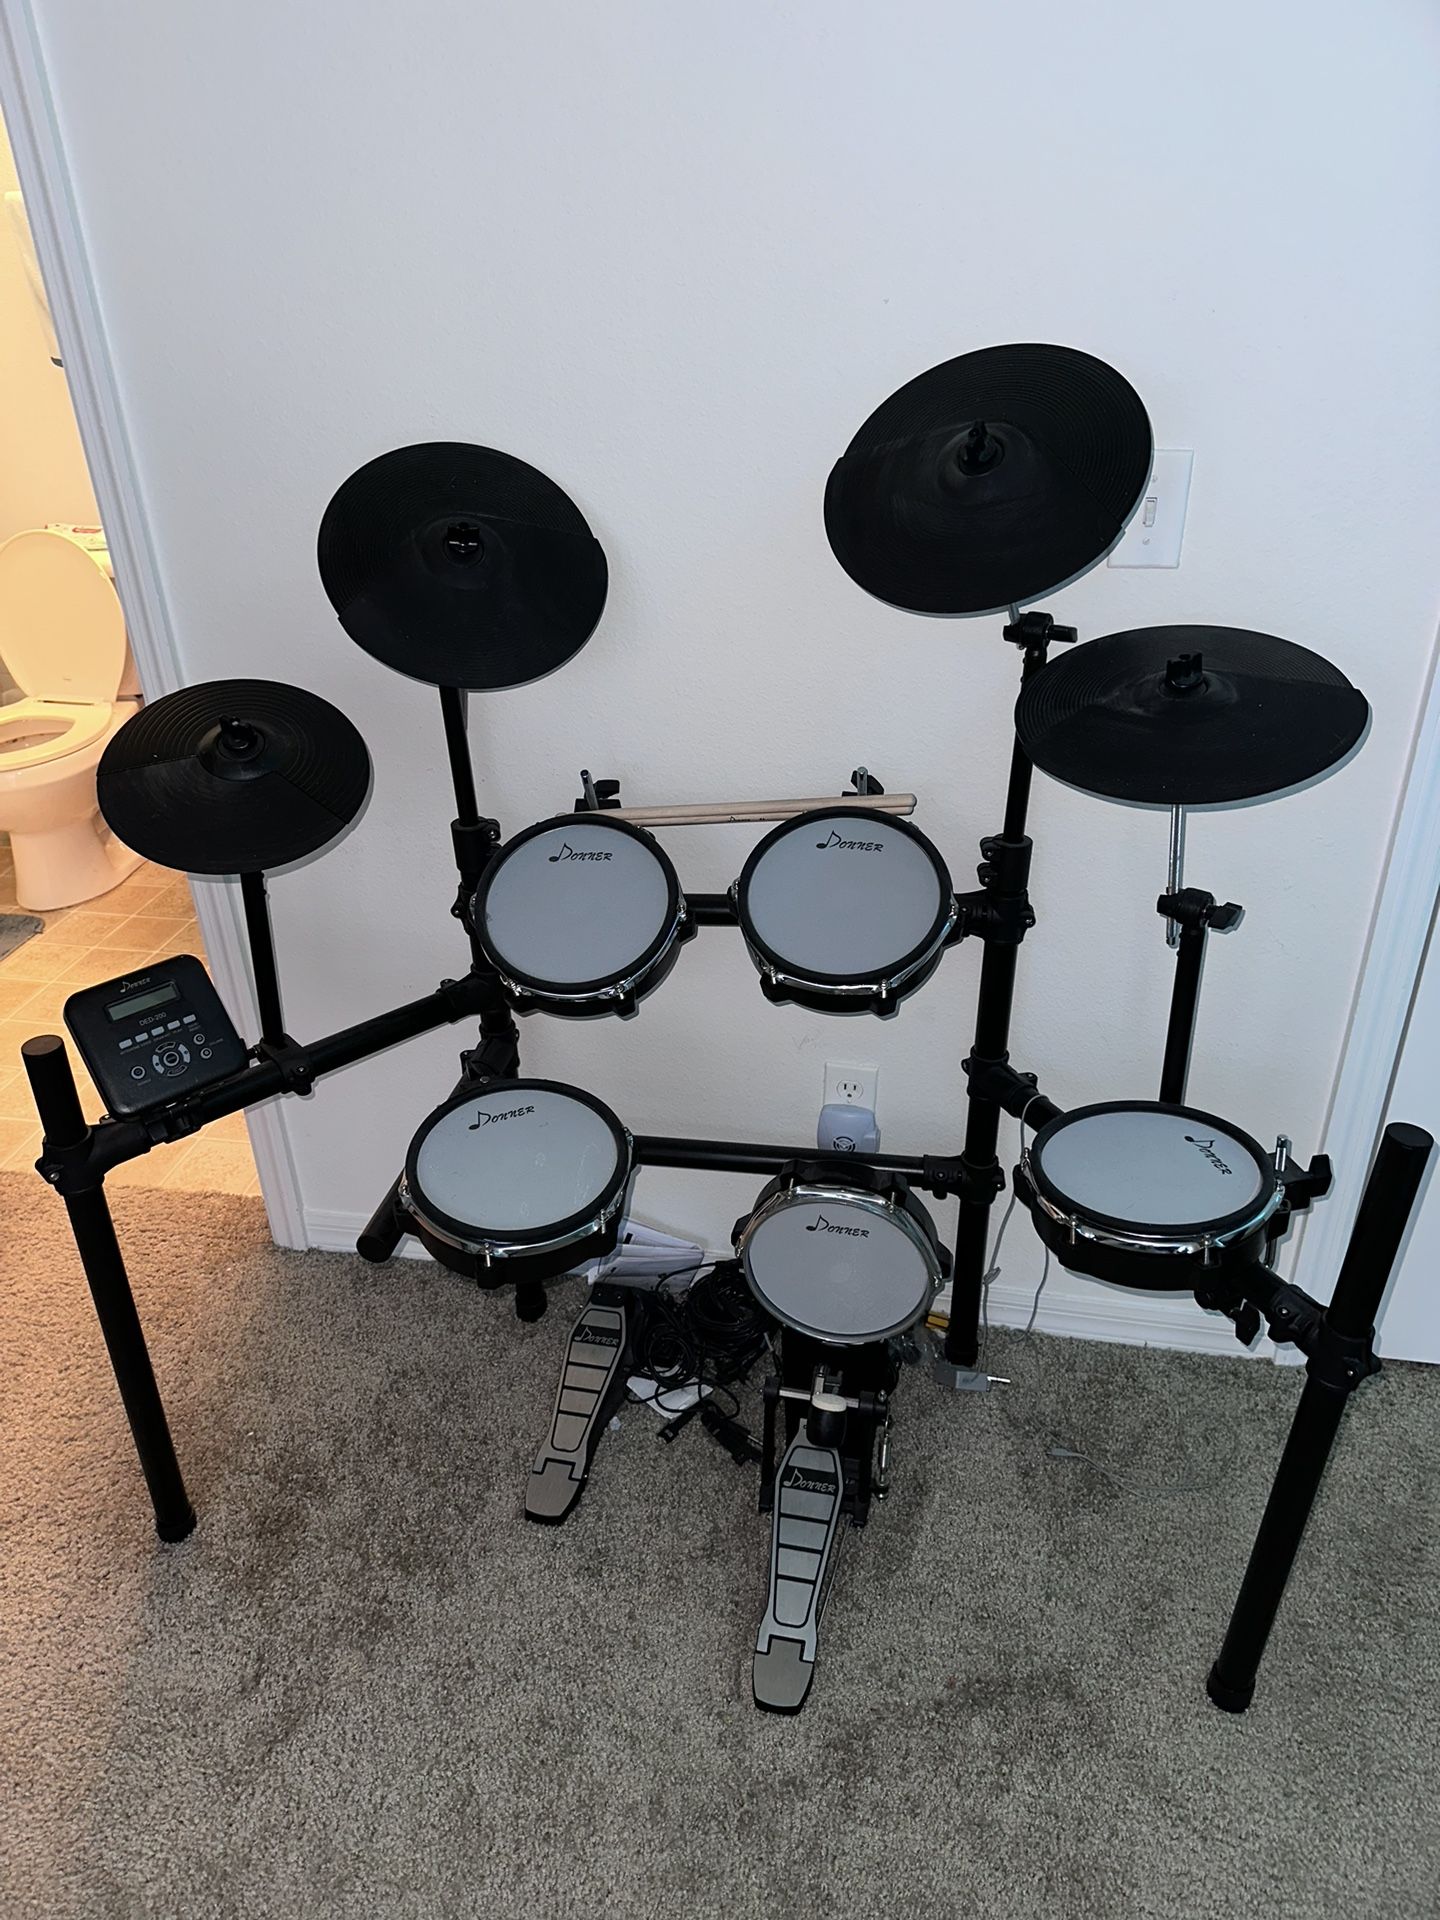 Donner-200 Cheap Electric Beginner’s Drum kit 